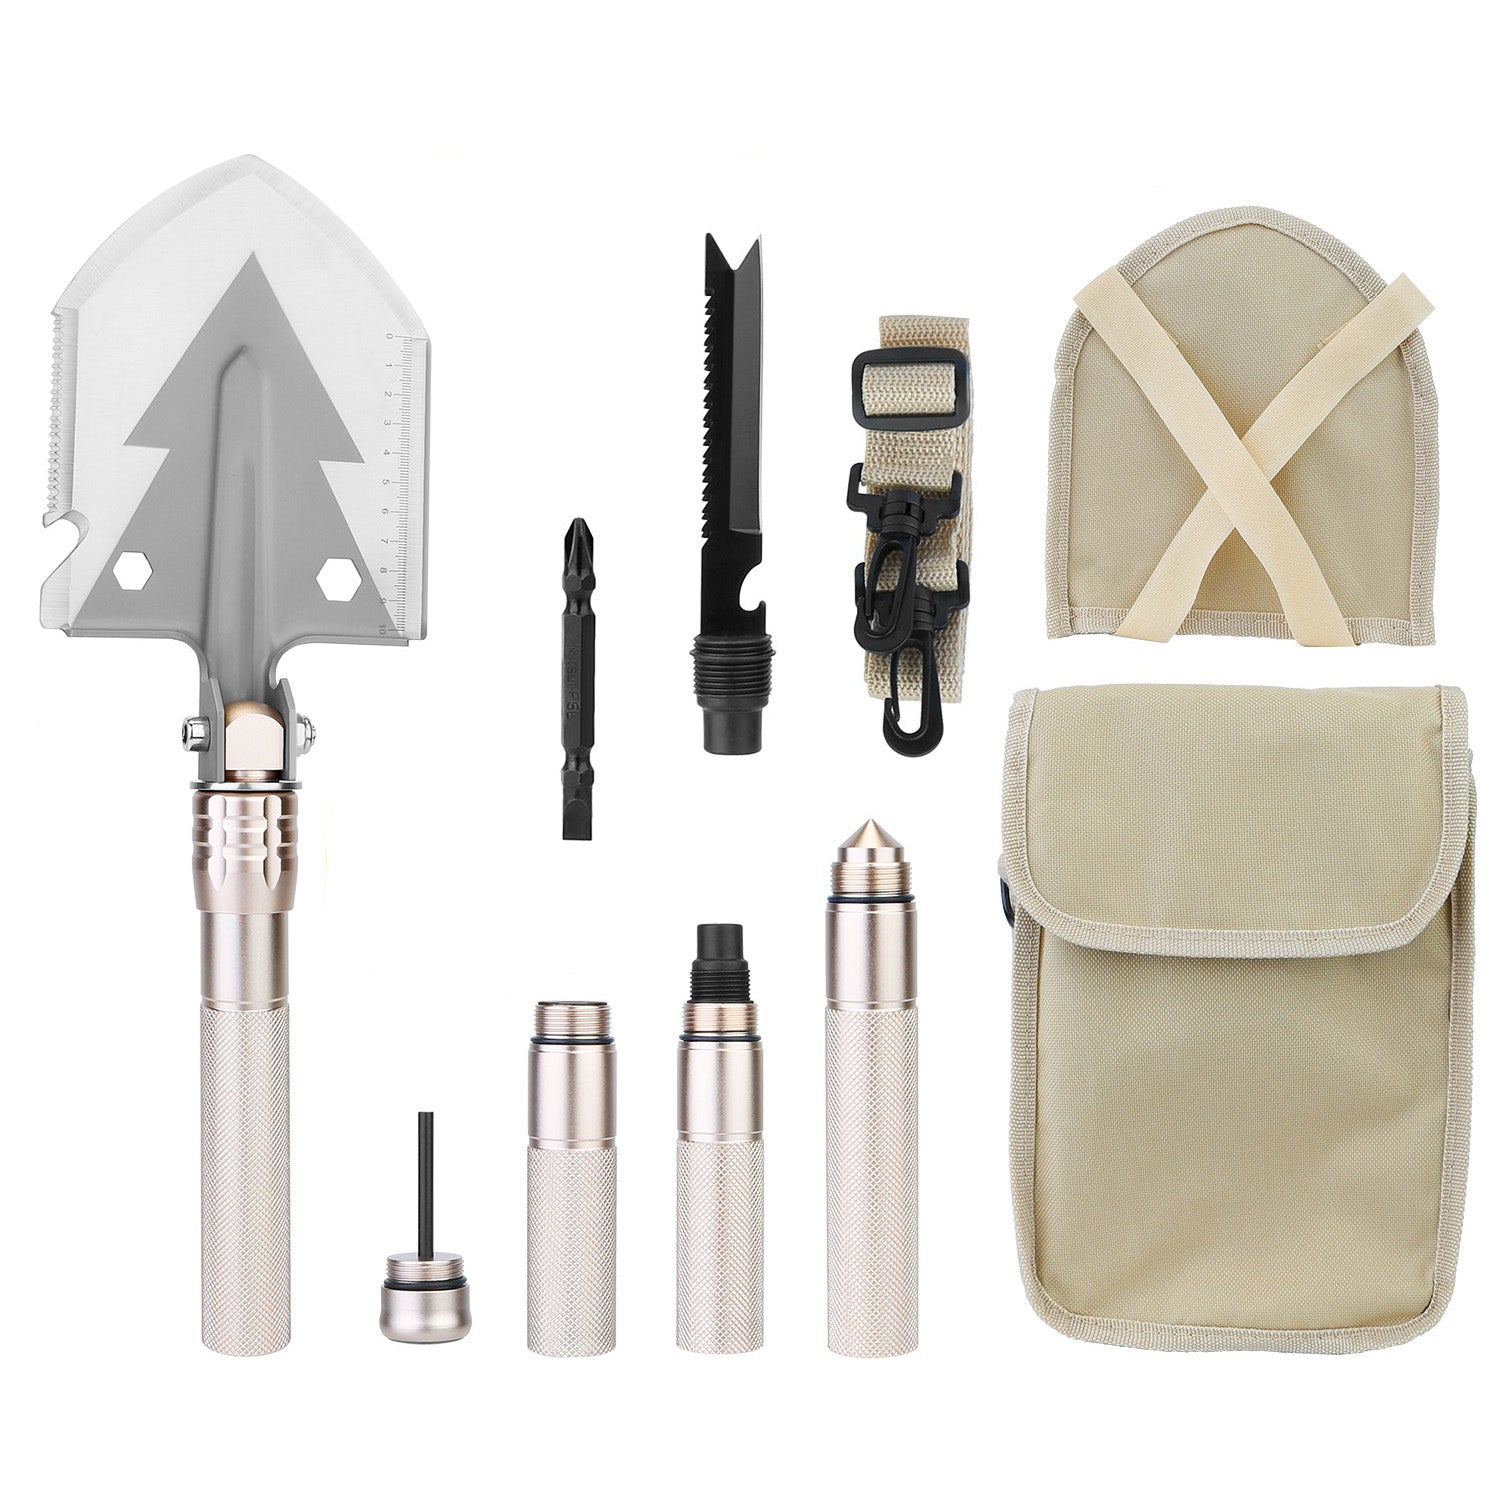 Portable Outdoor Folding Shovel Survival Multifunctional Kit for Camping Hiking